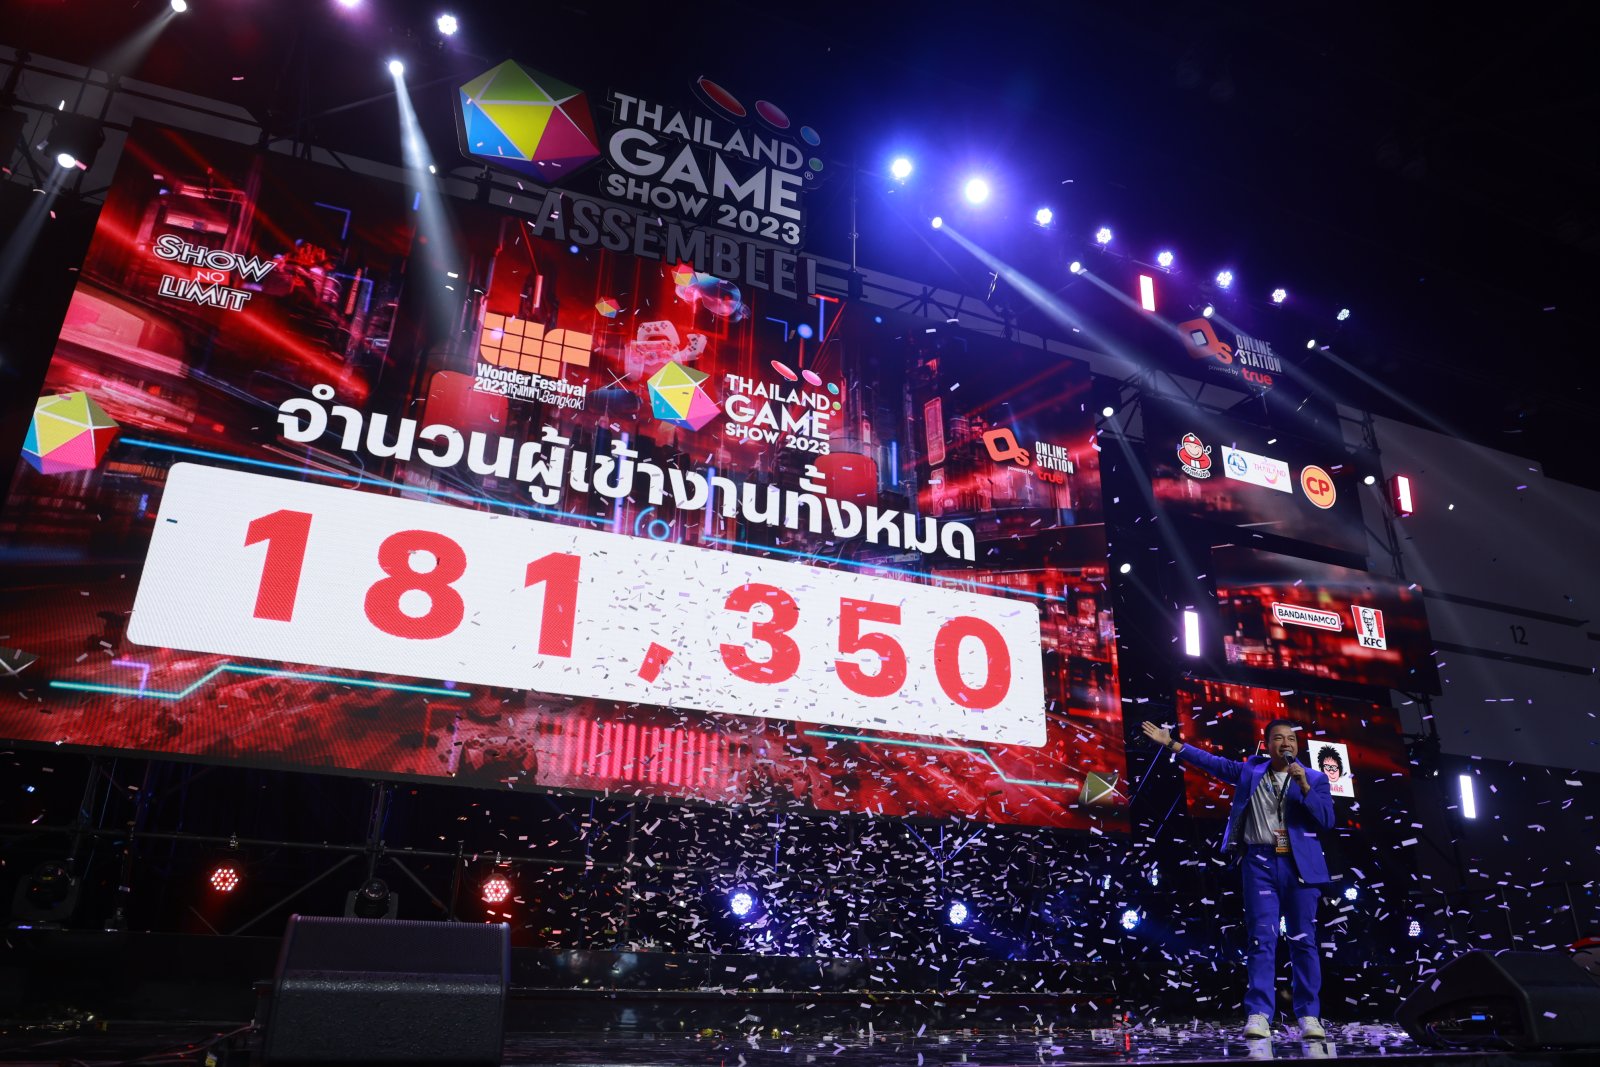 Thailand Game Show x Wonder Festival Bangkok 2023 ทุบสถิติ 3 วัน ผู้เข้าร่วมงานทะลุ 181,350 คน!